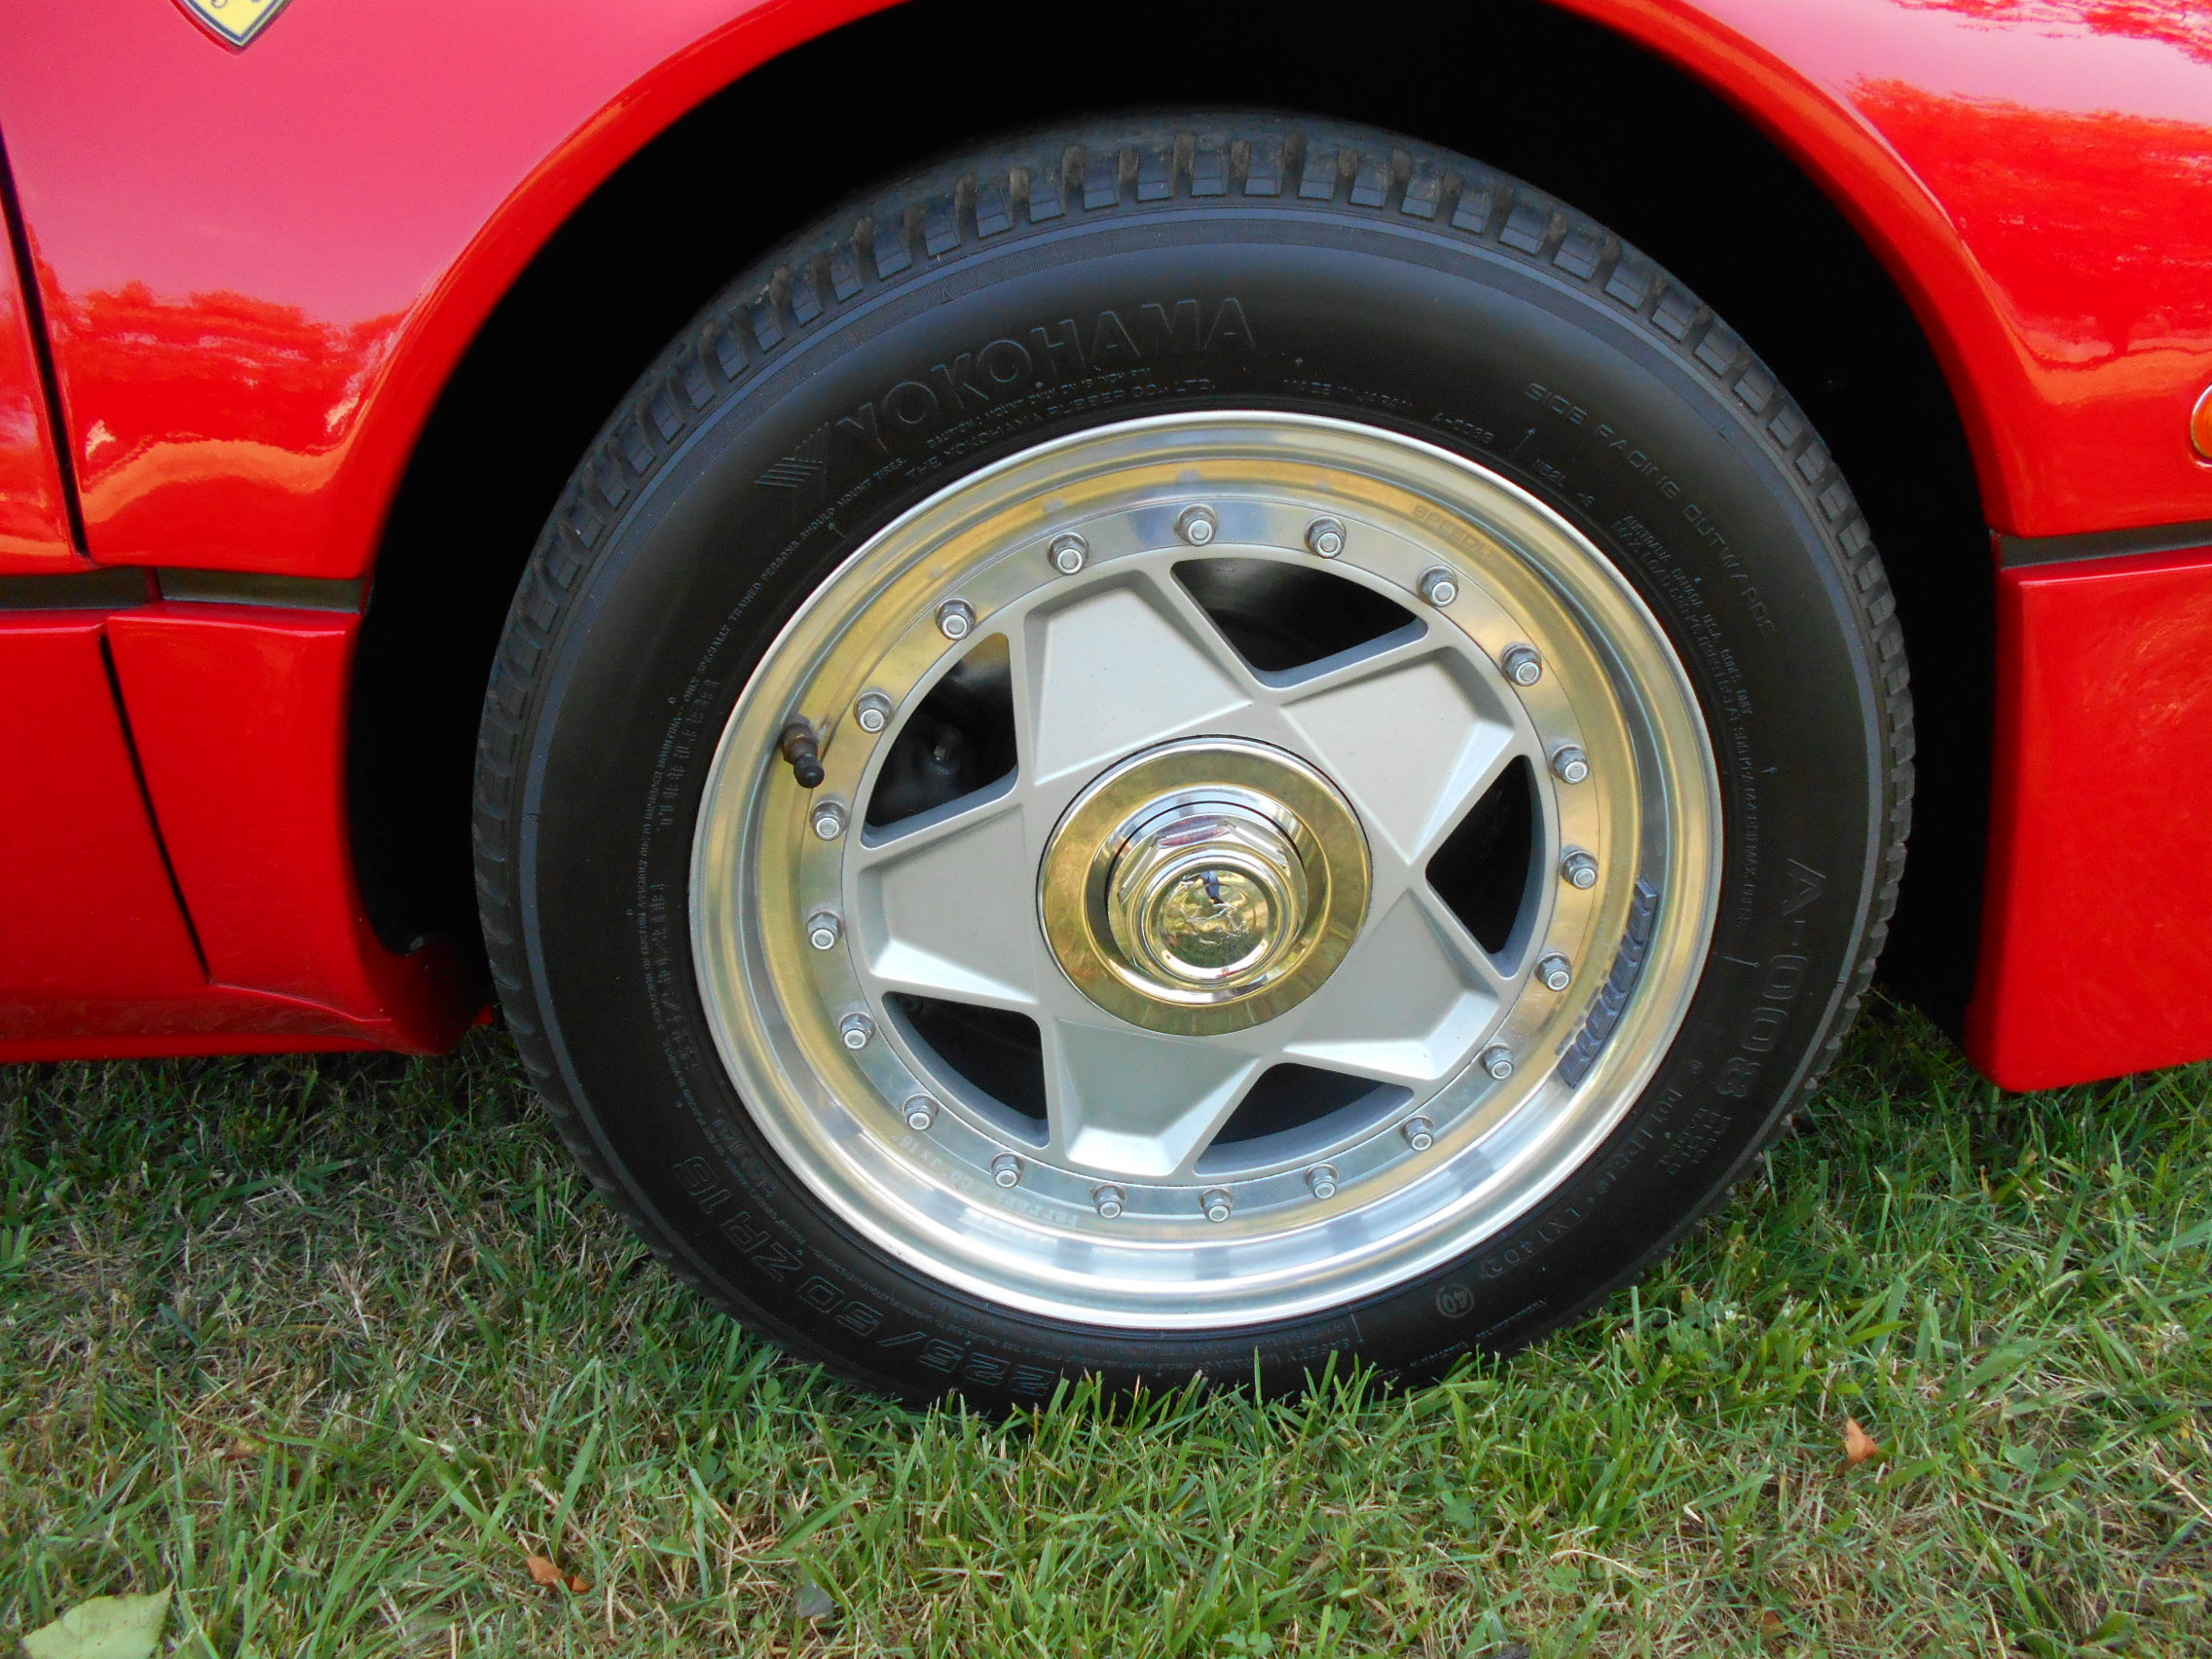 1985 288 GTO Ferrari - restoration, restored